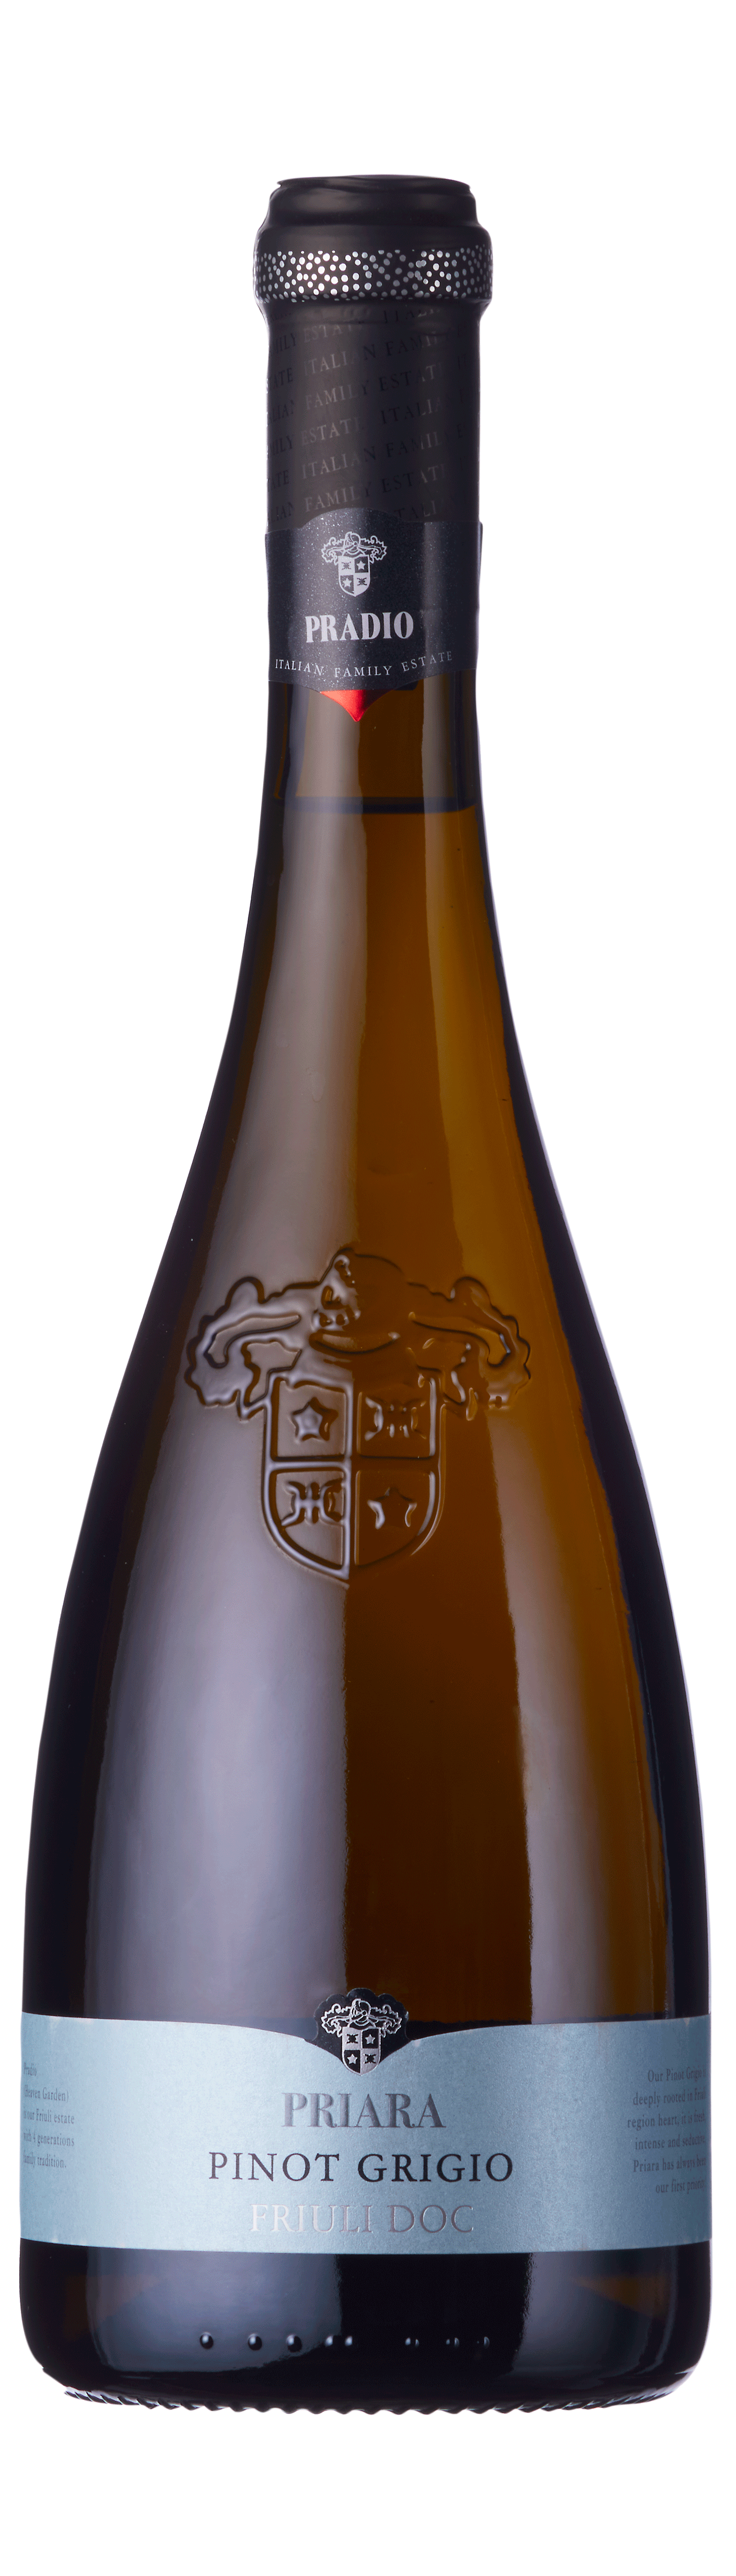 Bottle shot - Pradio, Pinot Grigio, DOC, Priara, DOC Friuli Grave, Italy